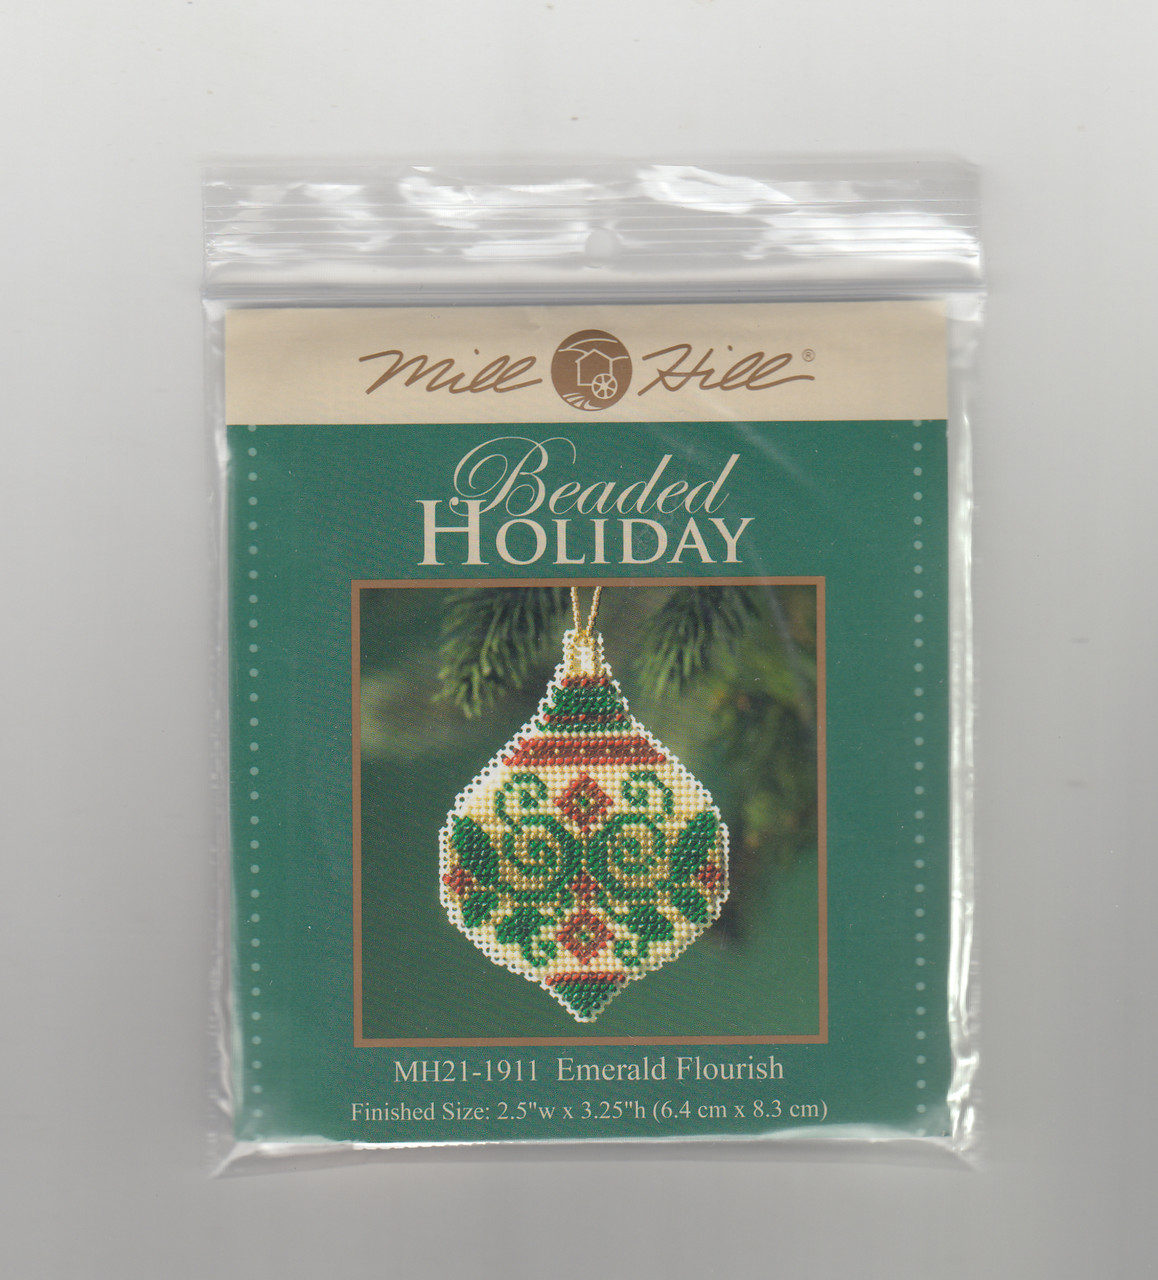 Mill Hill 2019 Beaded Holiday Ornament - Emerald Flourish